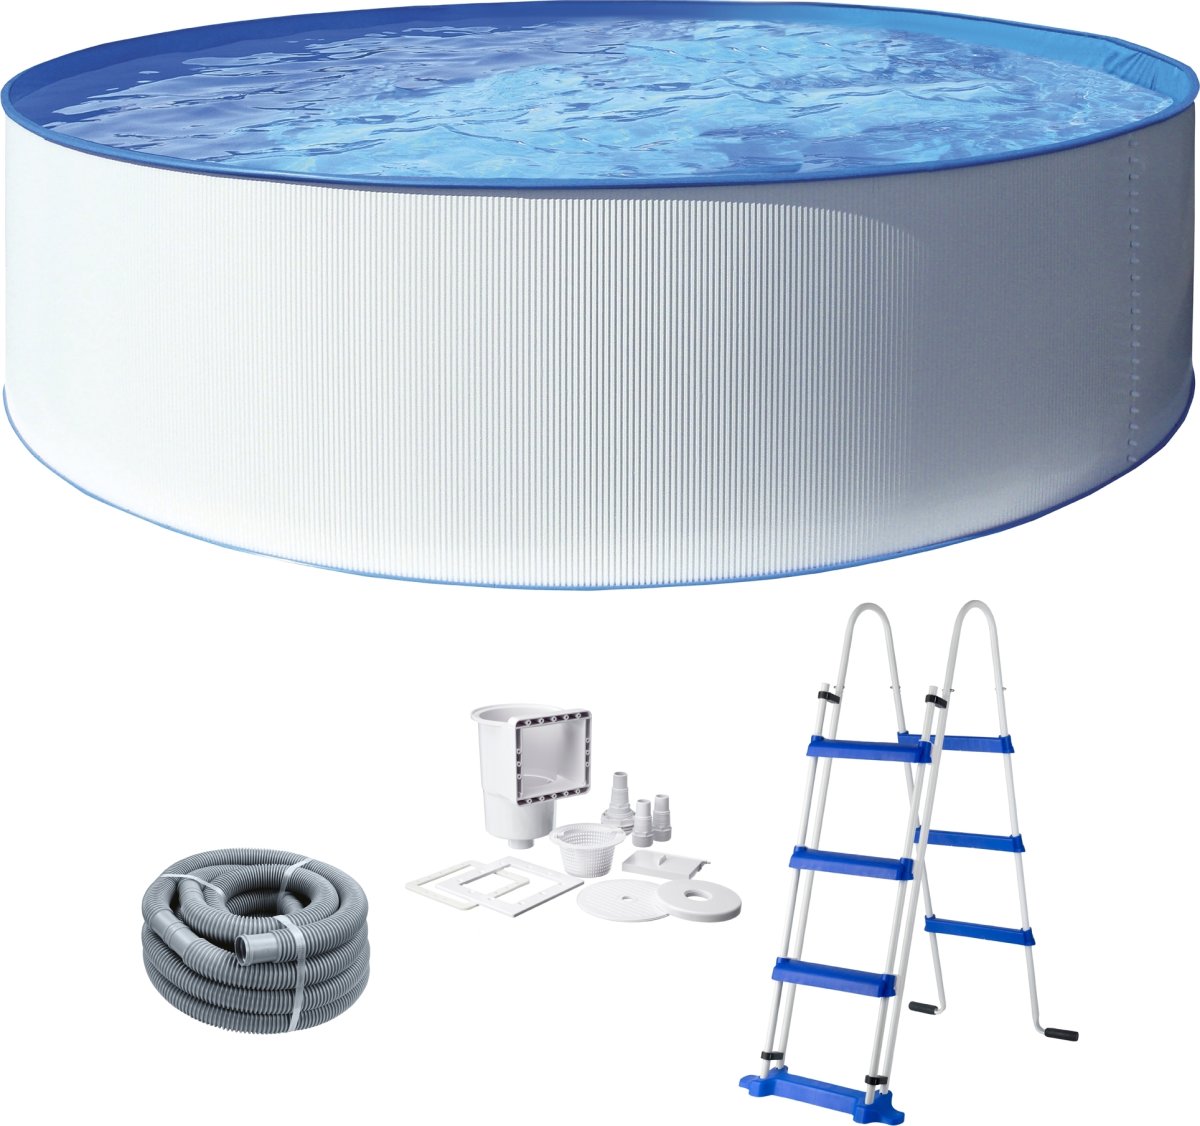 Kreta Pool XL, Ø360 cm x 120 cm, 10800 liter